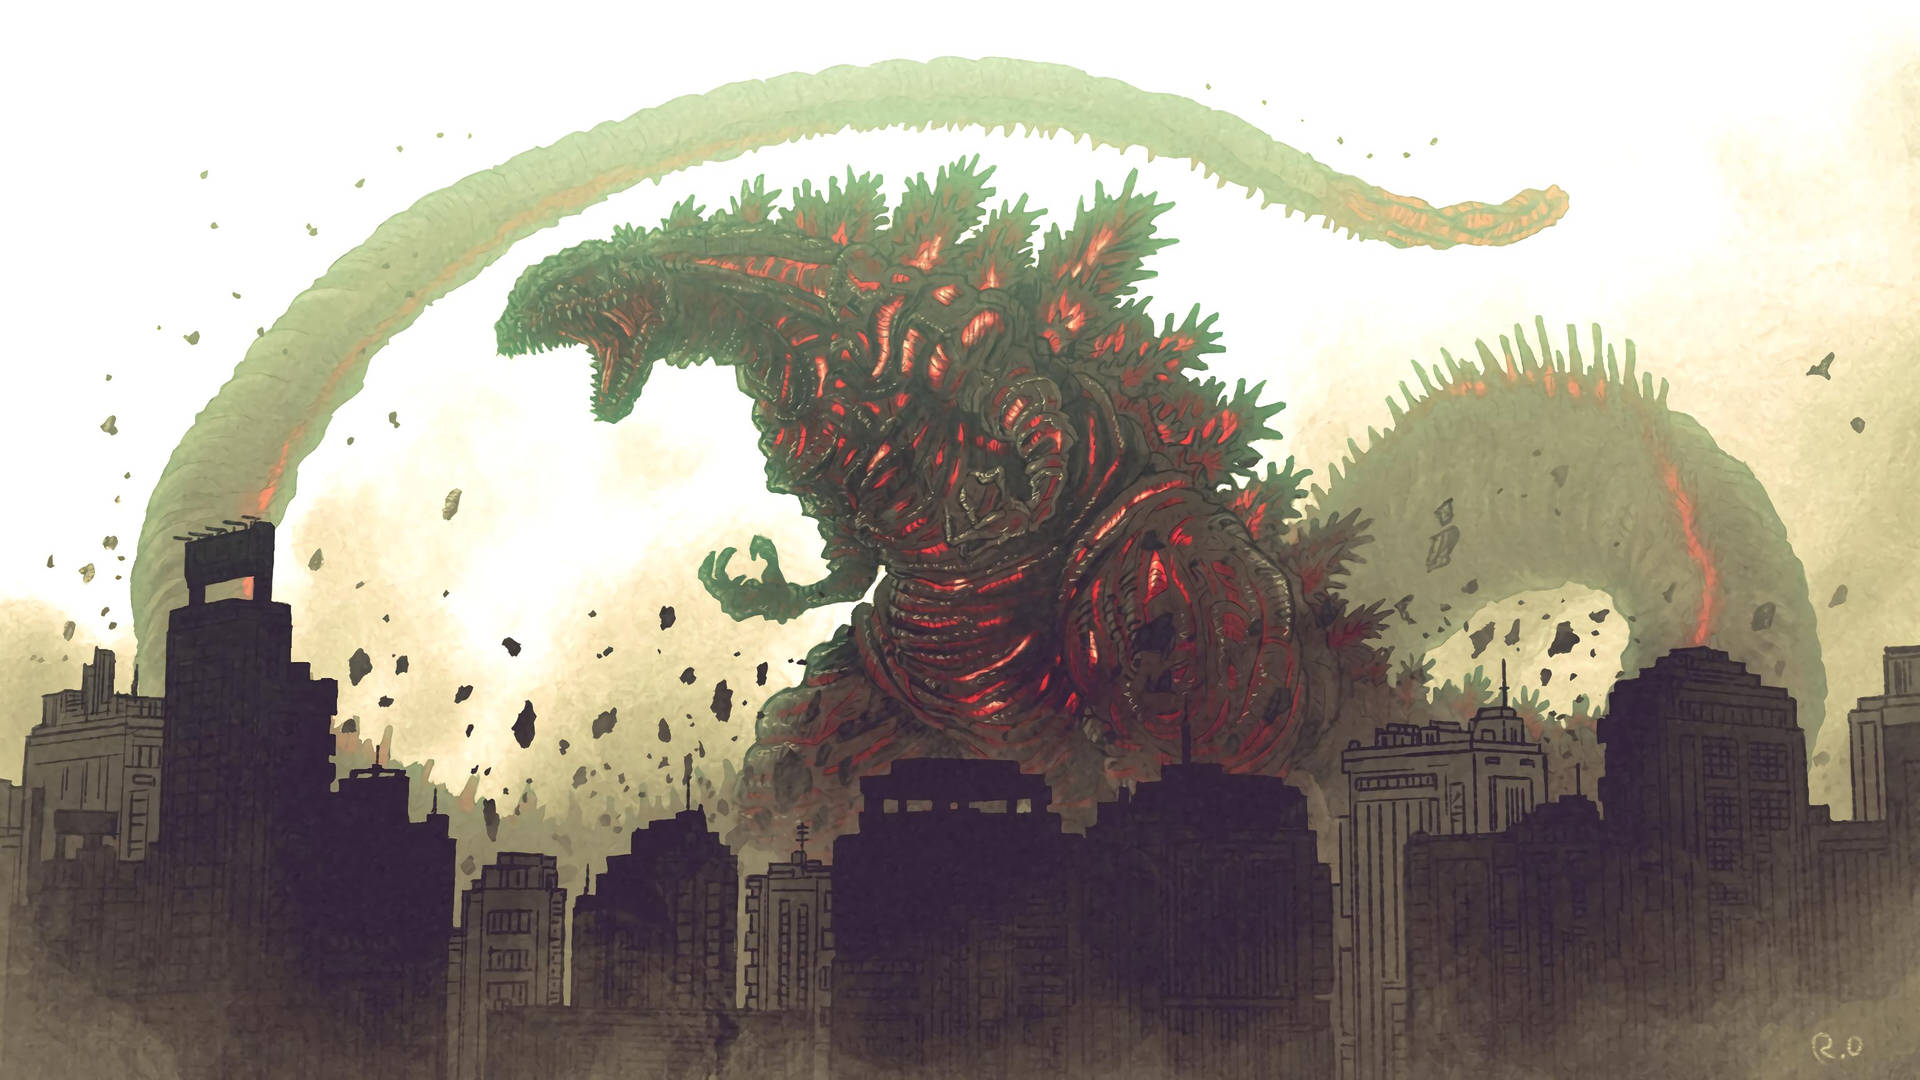 Shin Godzilla Roaring In The Midst Of Destruction